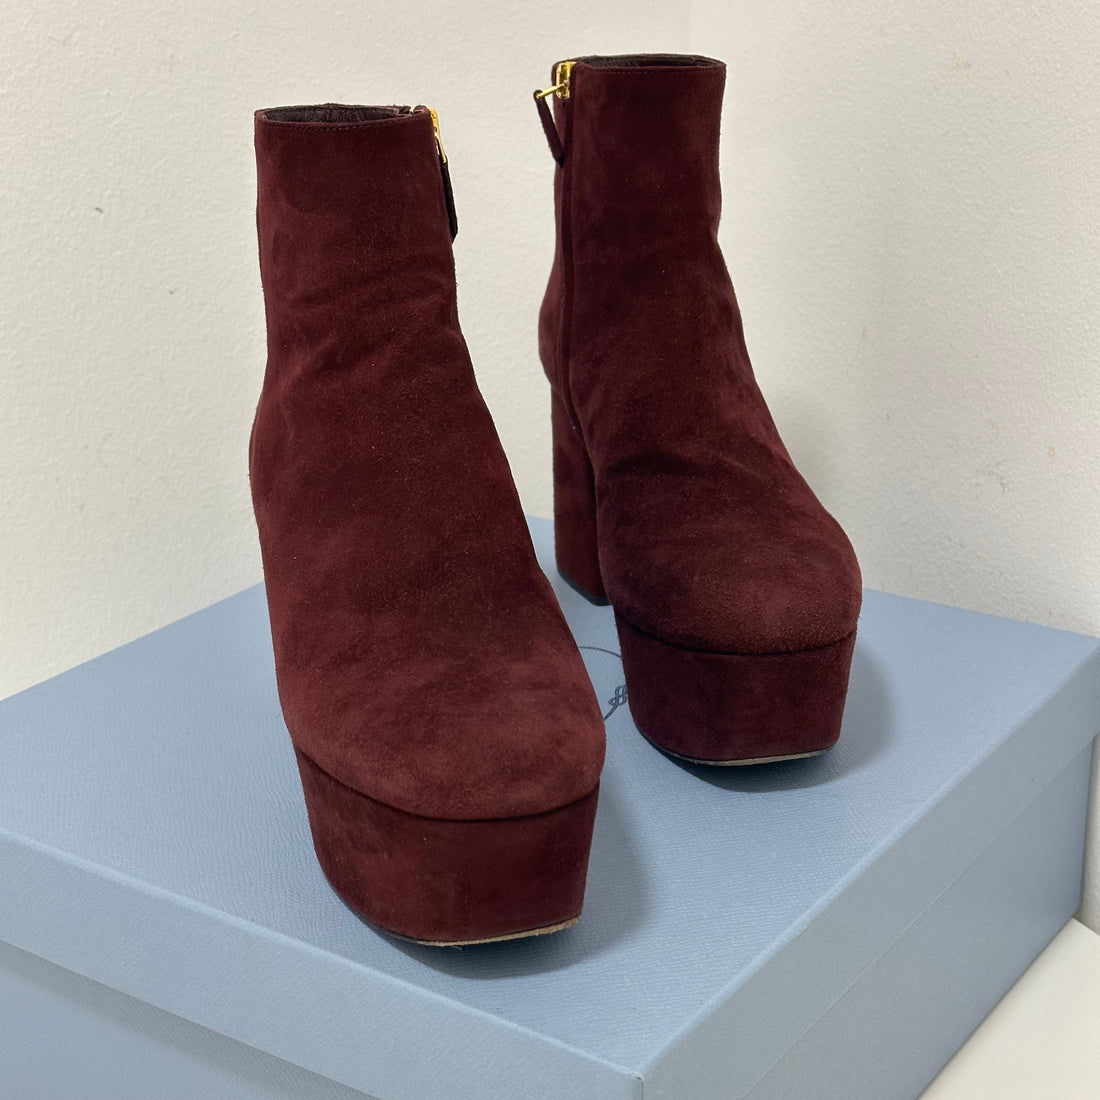 Prada - Ankle boots